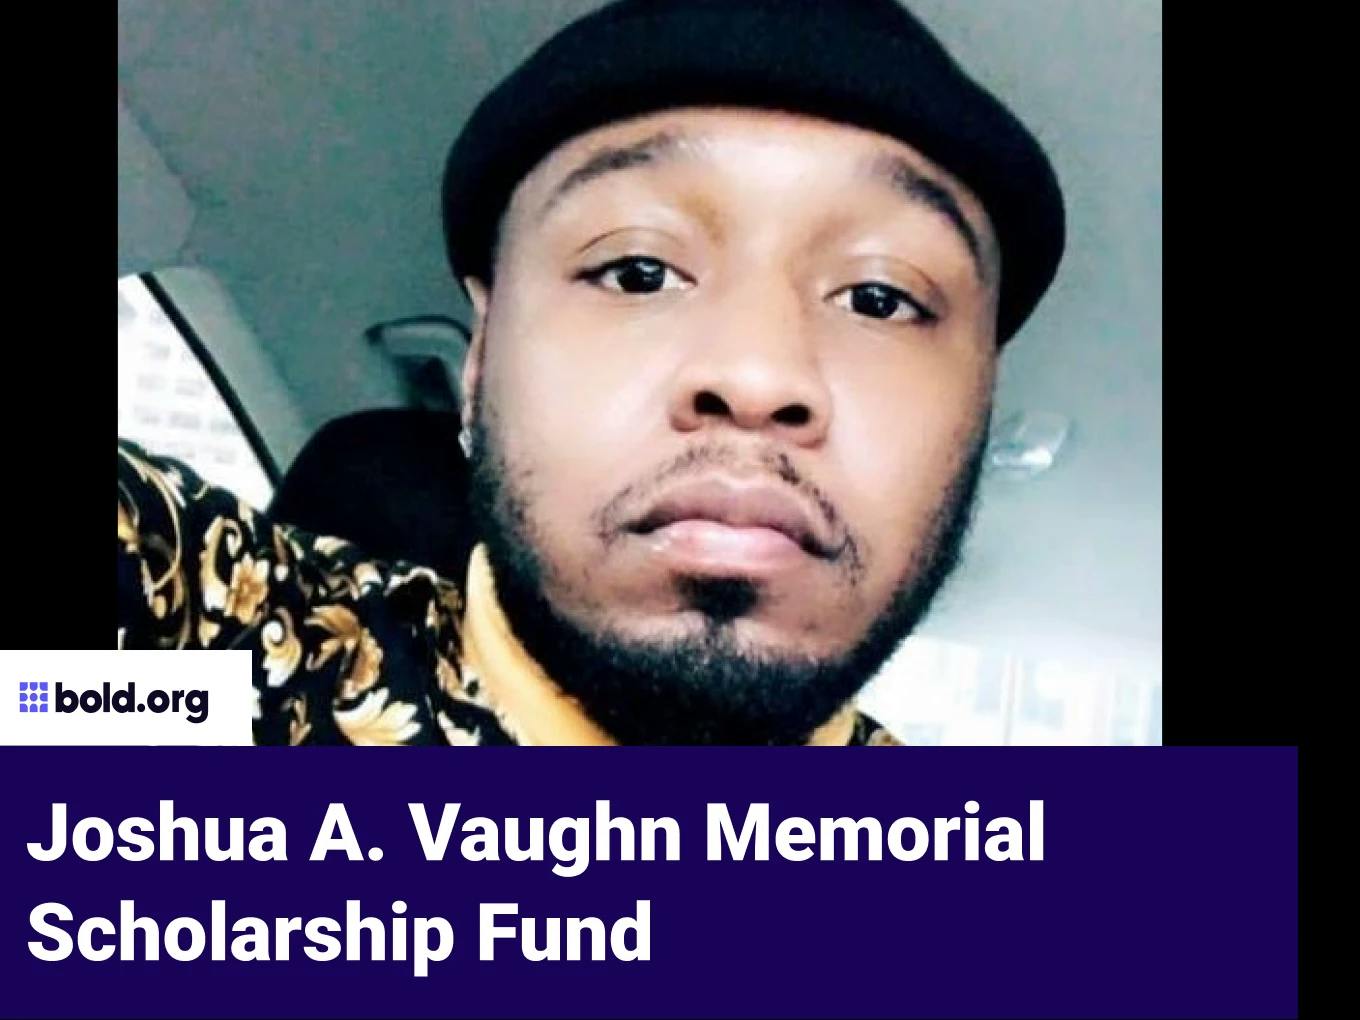 Joshua A. Vaughn Memorial Scholarship Fund